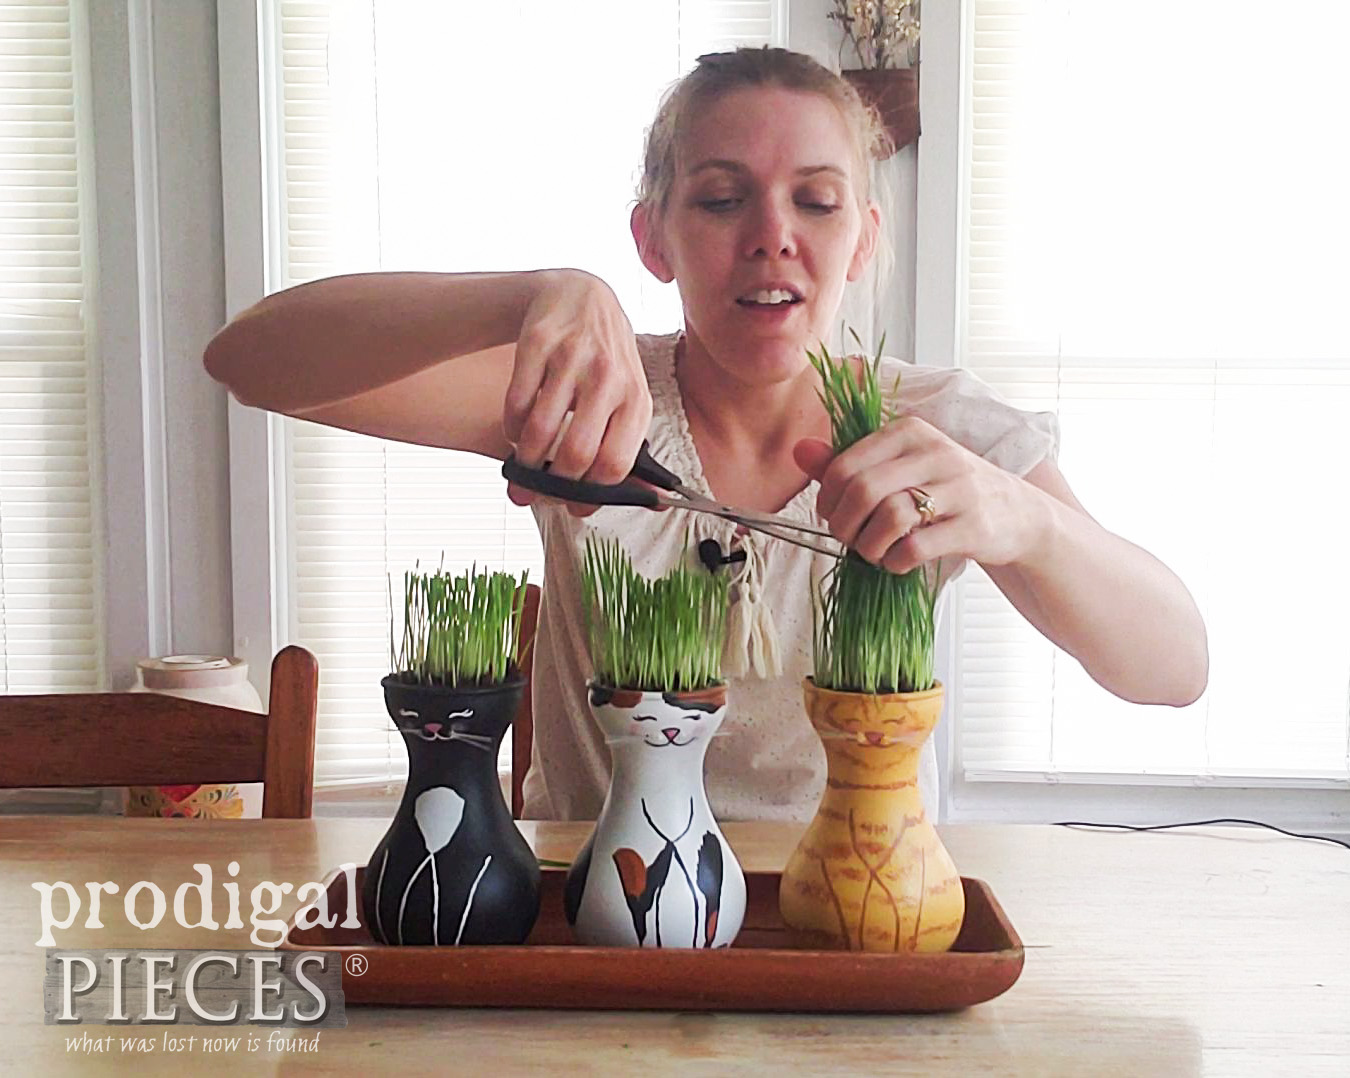 Cutting Wheatgrass Cat Grass for Recipes by Larissa of Prodigal Pieces | prodigalpieces.com #prodigalpieces #food #health #pets #diy #home #homedecor